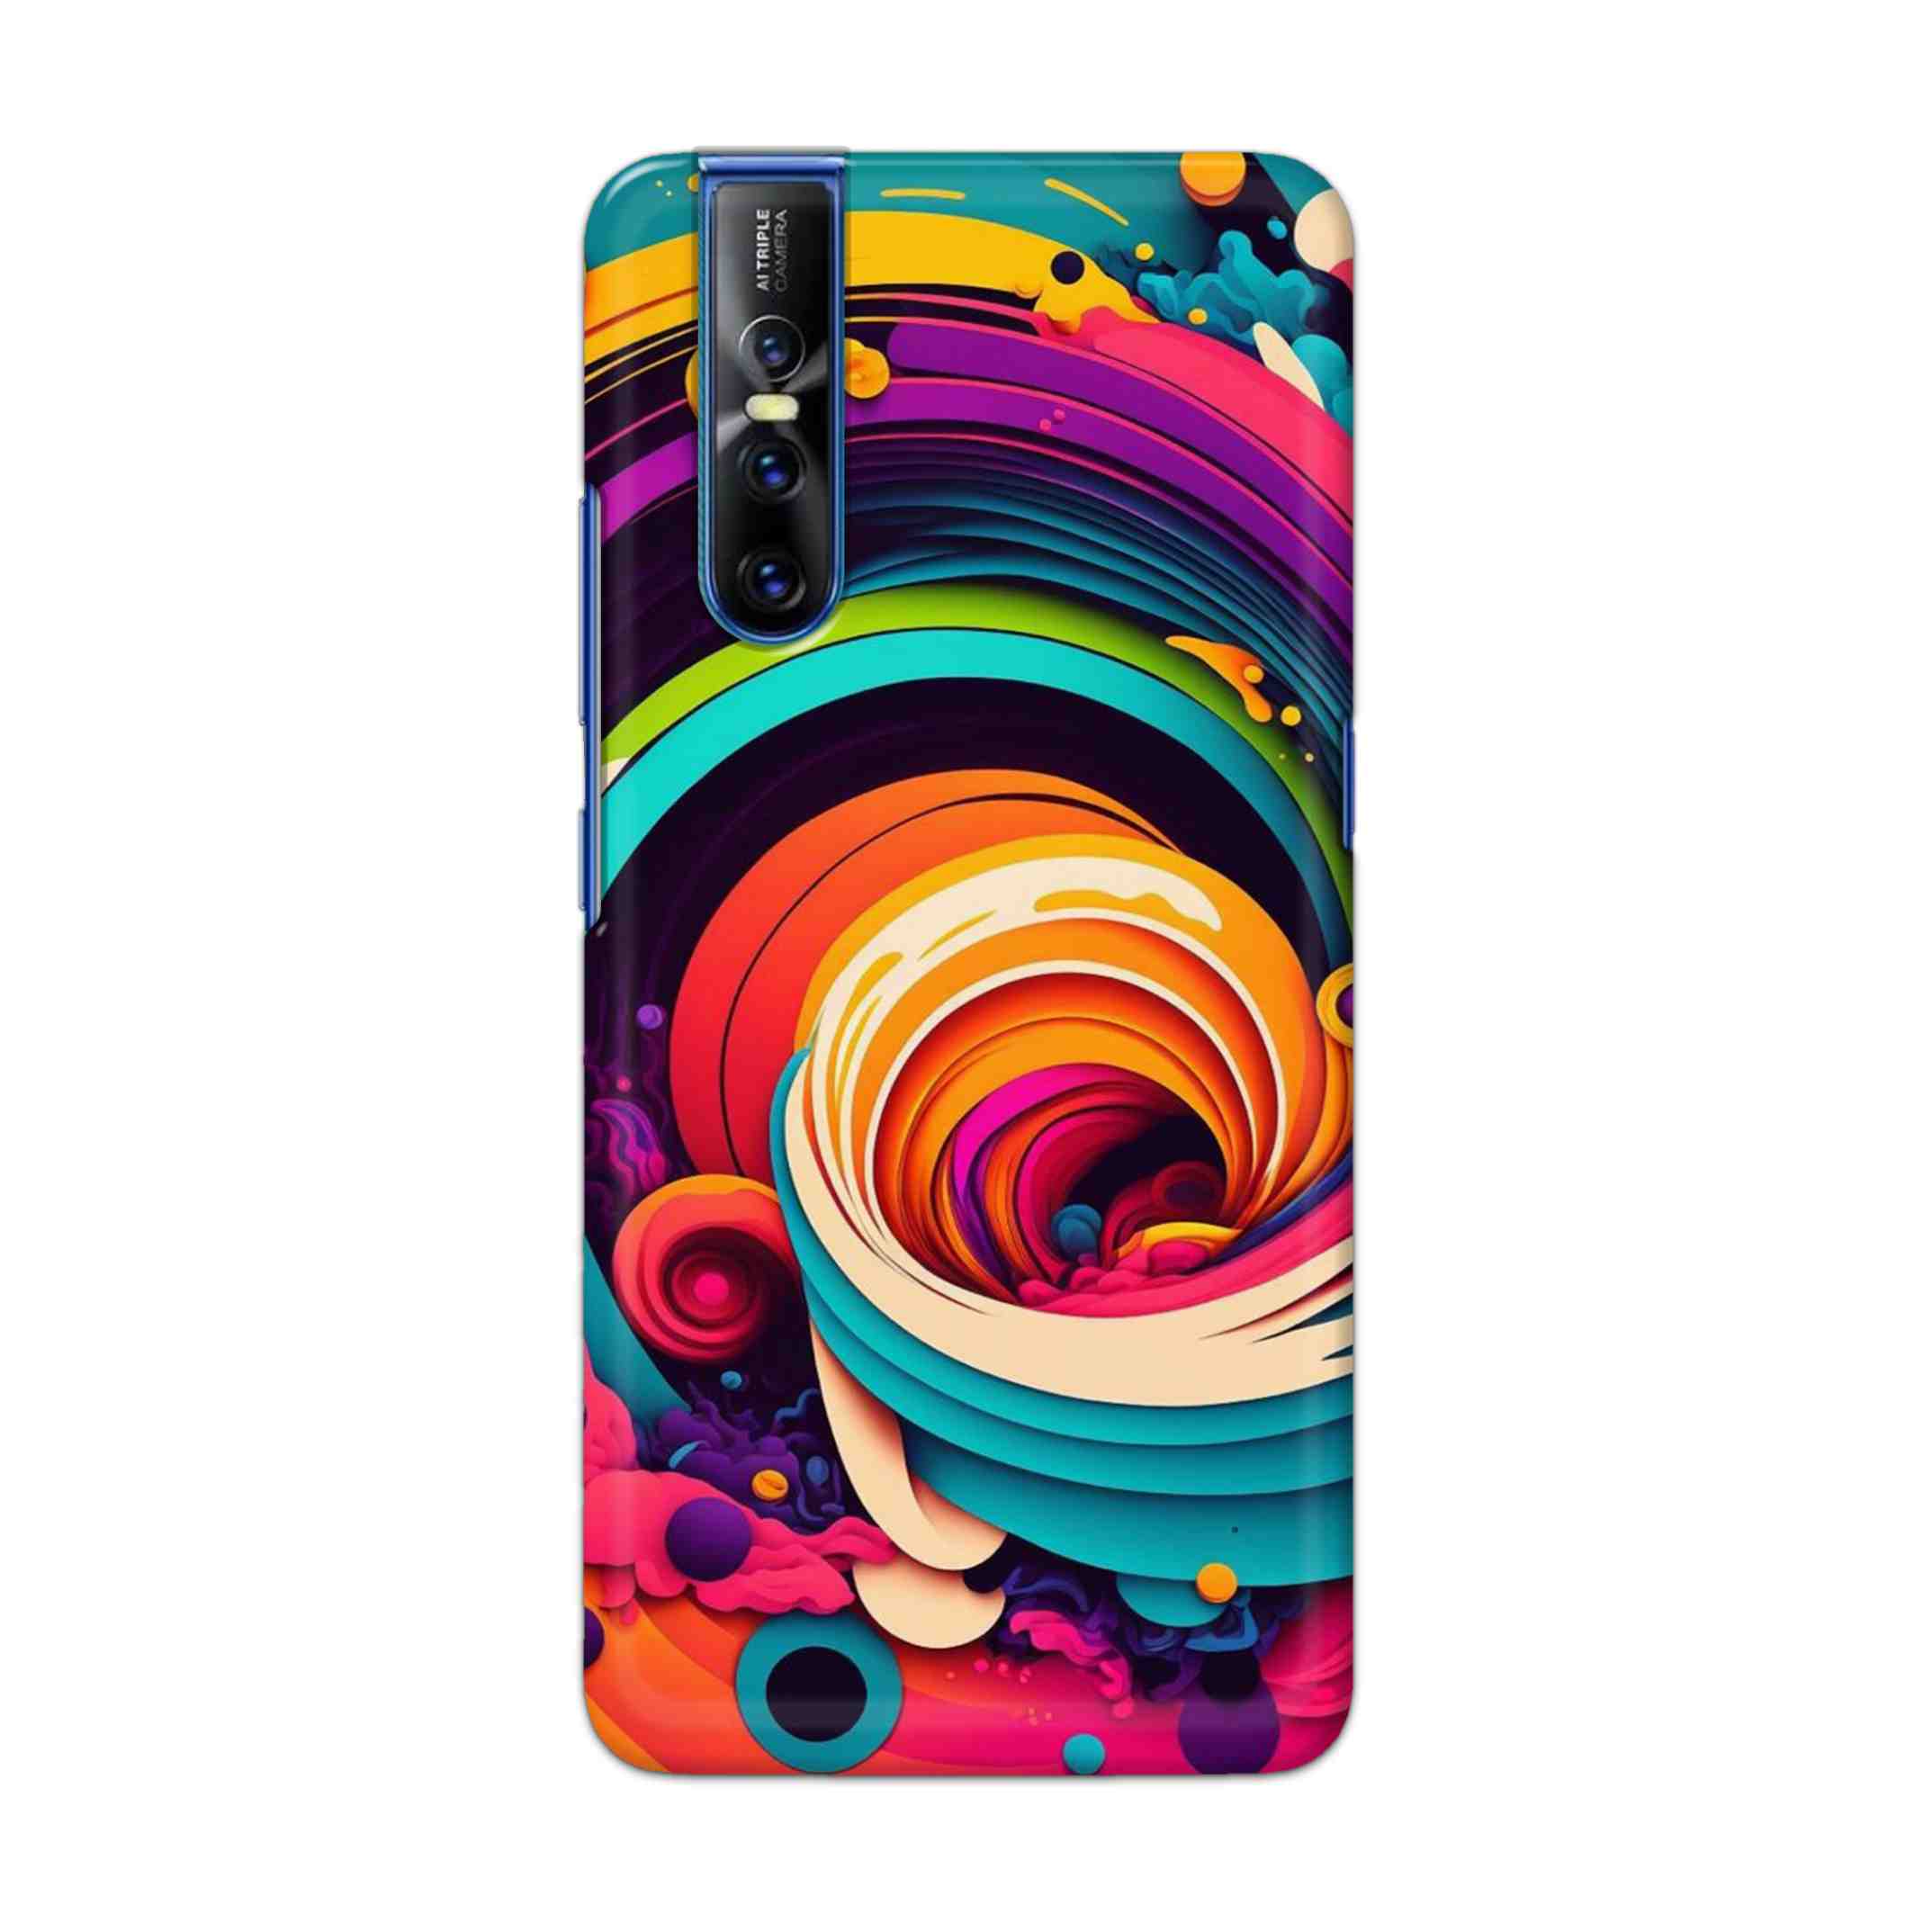 Buy Colour Circle Hard Back Mobile Phone Case Cover For Vivo V15 Pro Online